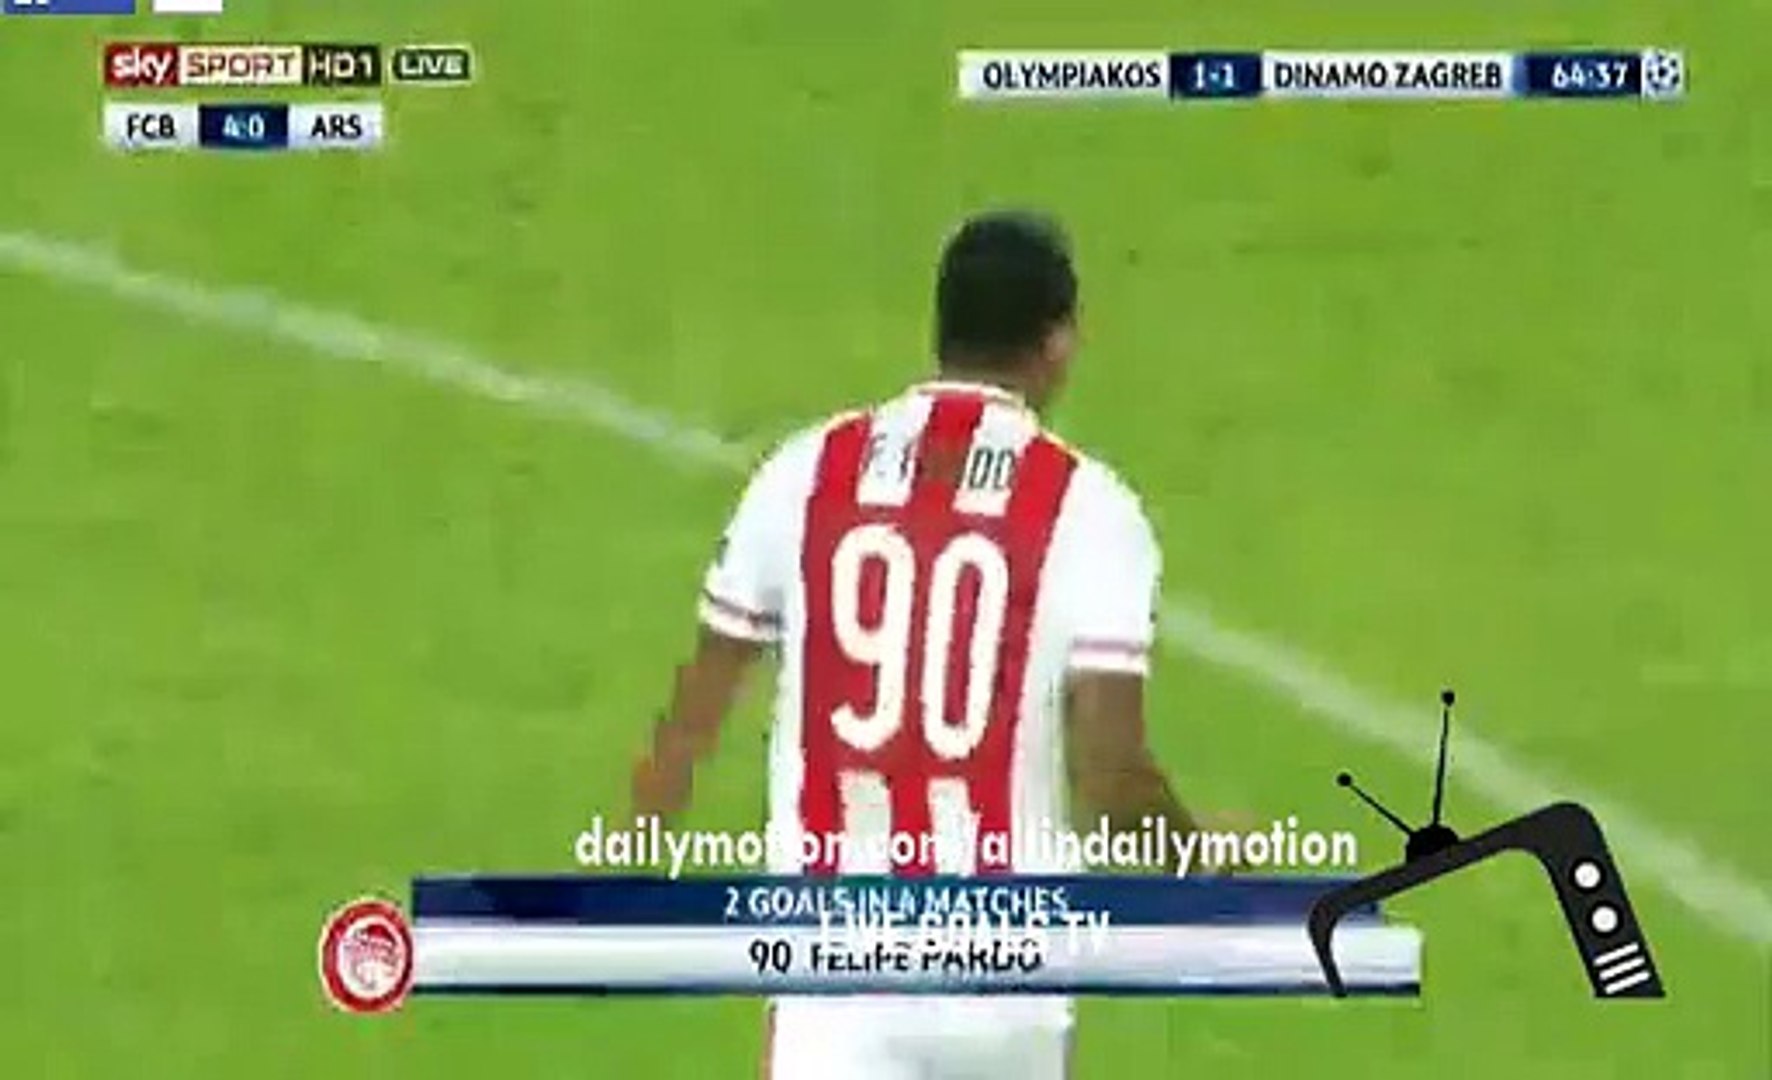 Felipe Pardo Incredible Goal - Olympiakos 1-1 Dinamo Zagreb - Champions  League - 04.11.2015 - video Dailymotion